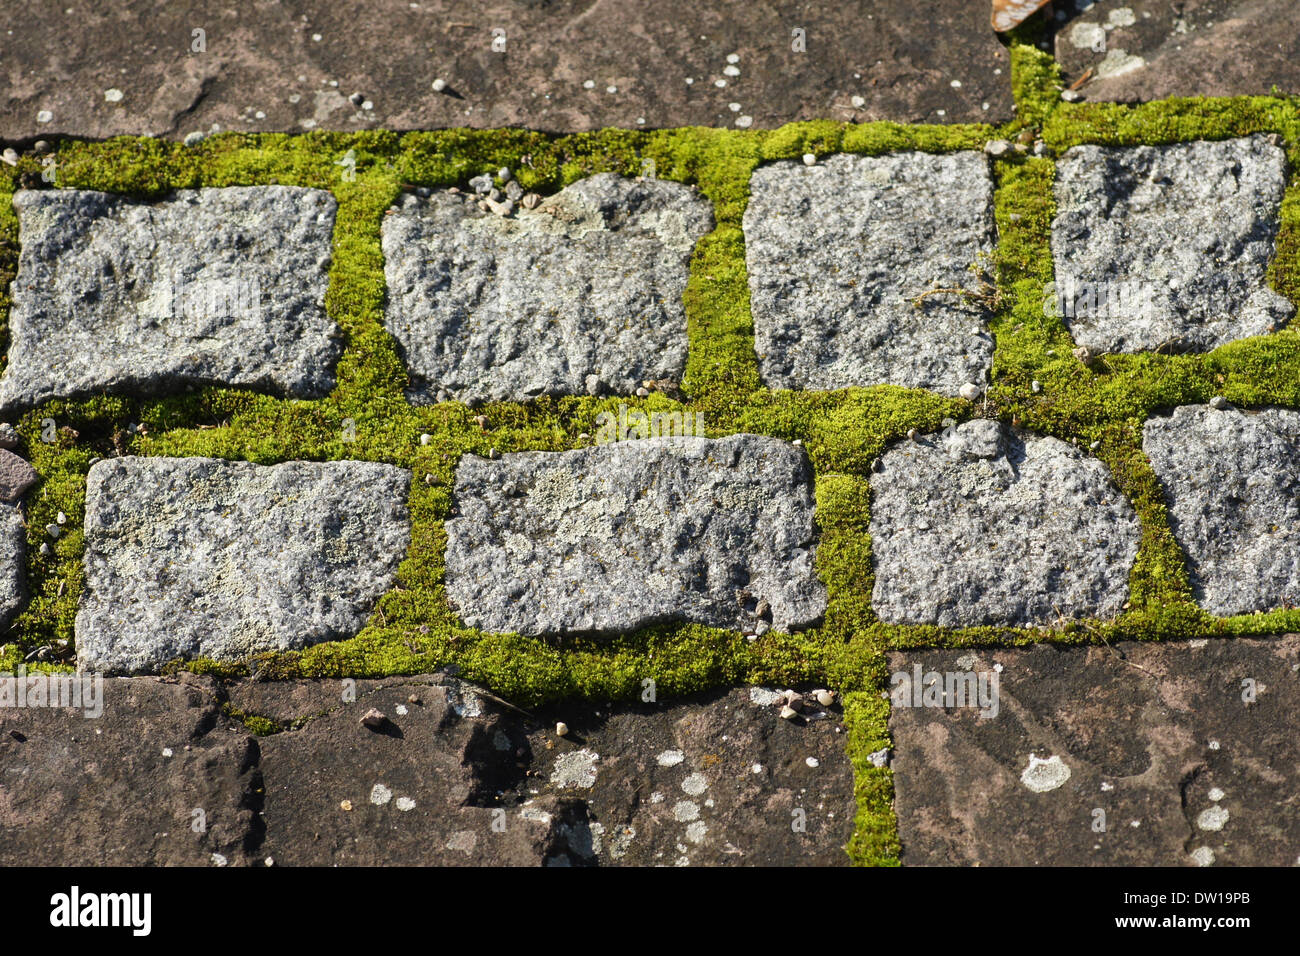 Granite pavement with moss Stock Photo